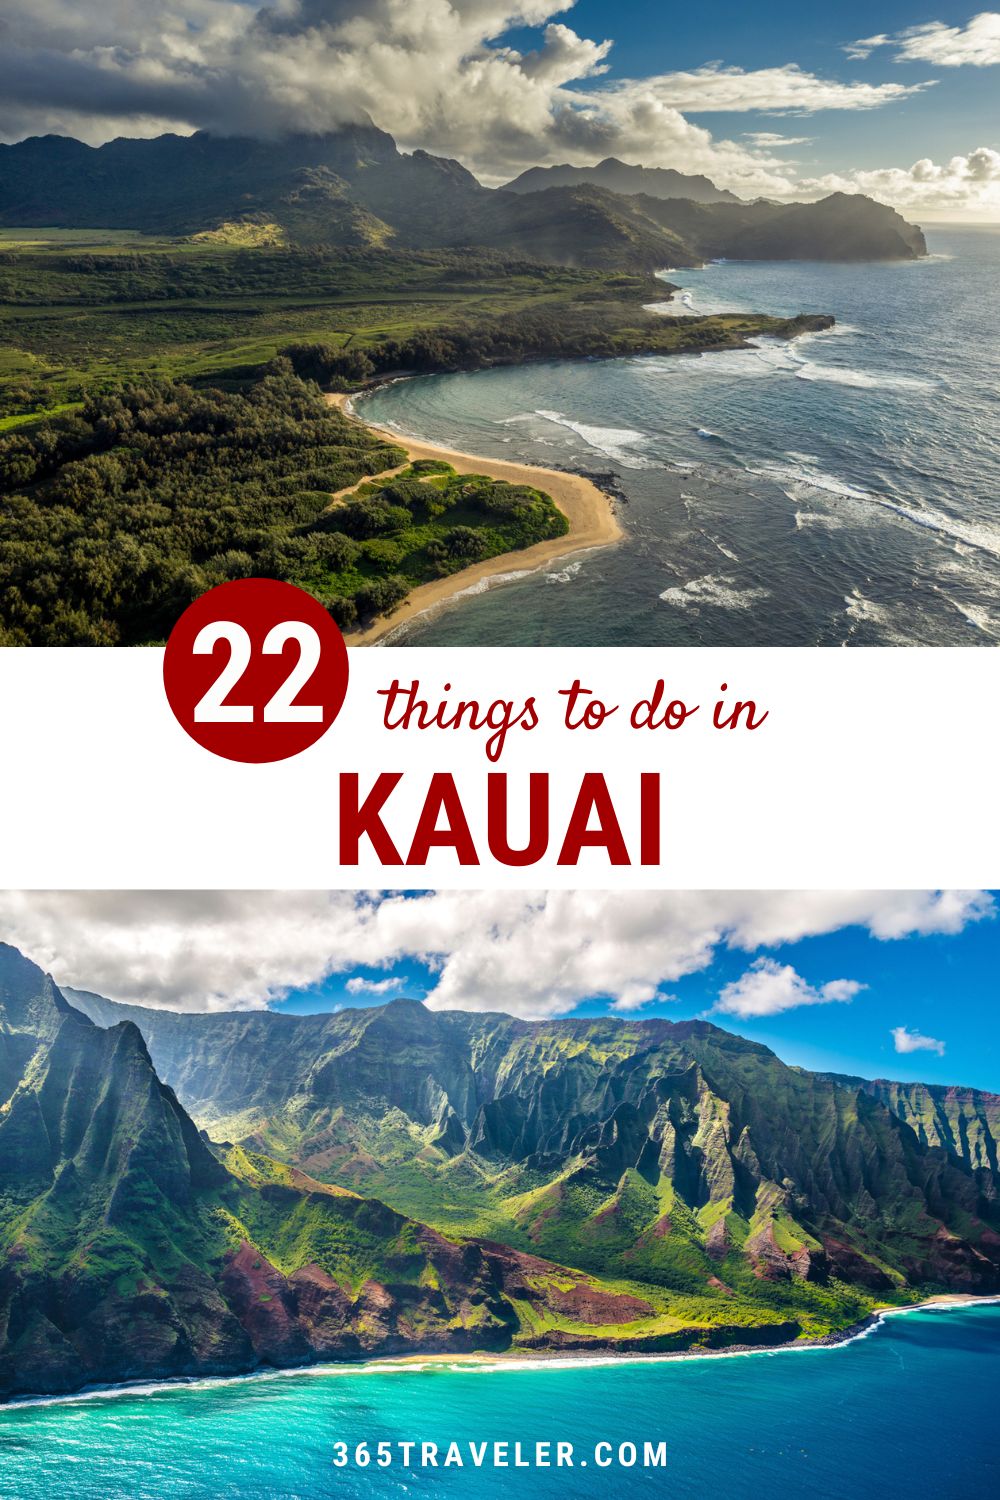 22 BREATHTAKING THINGS TO DO IN KAUAI YOU'LL LOVE